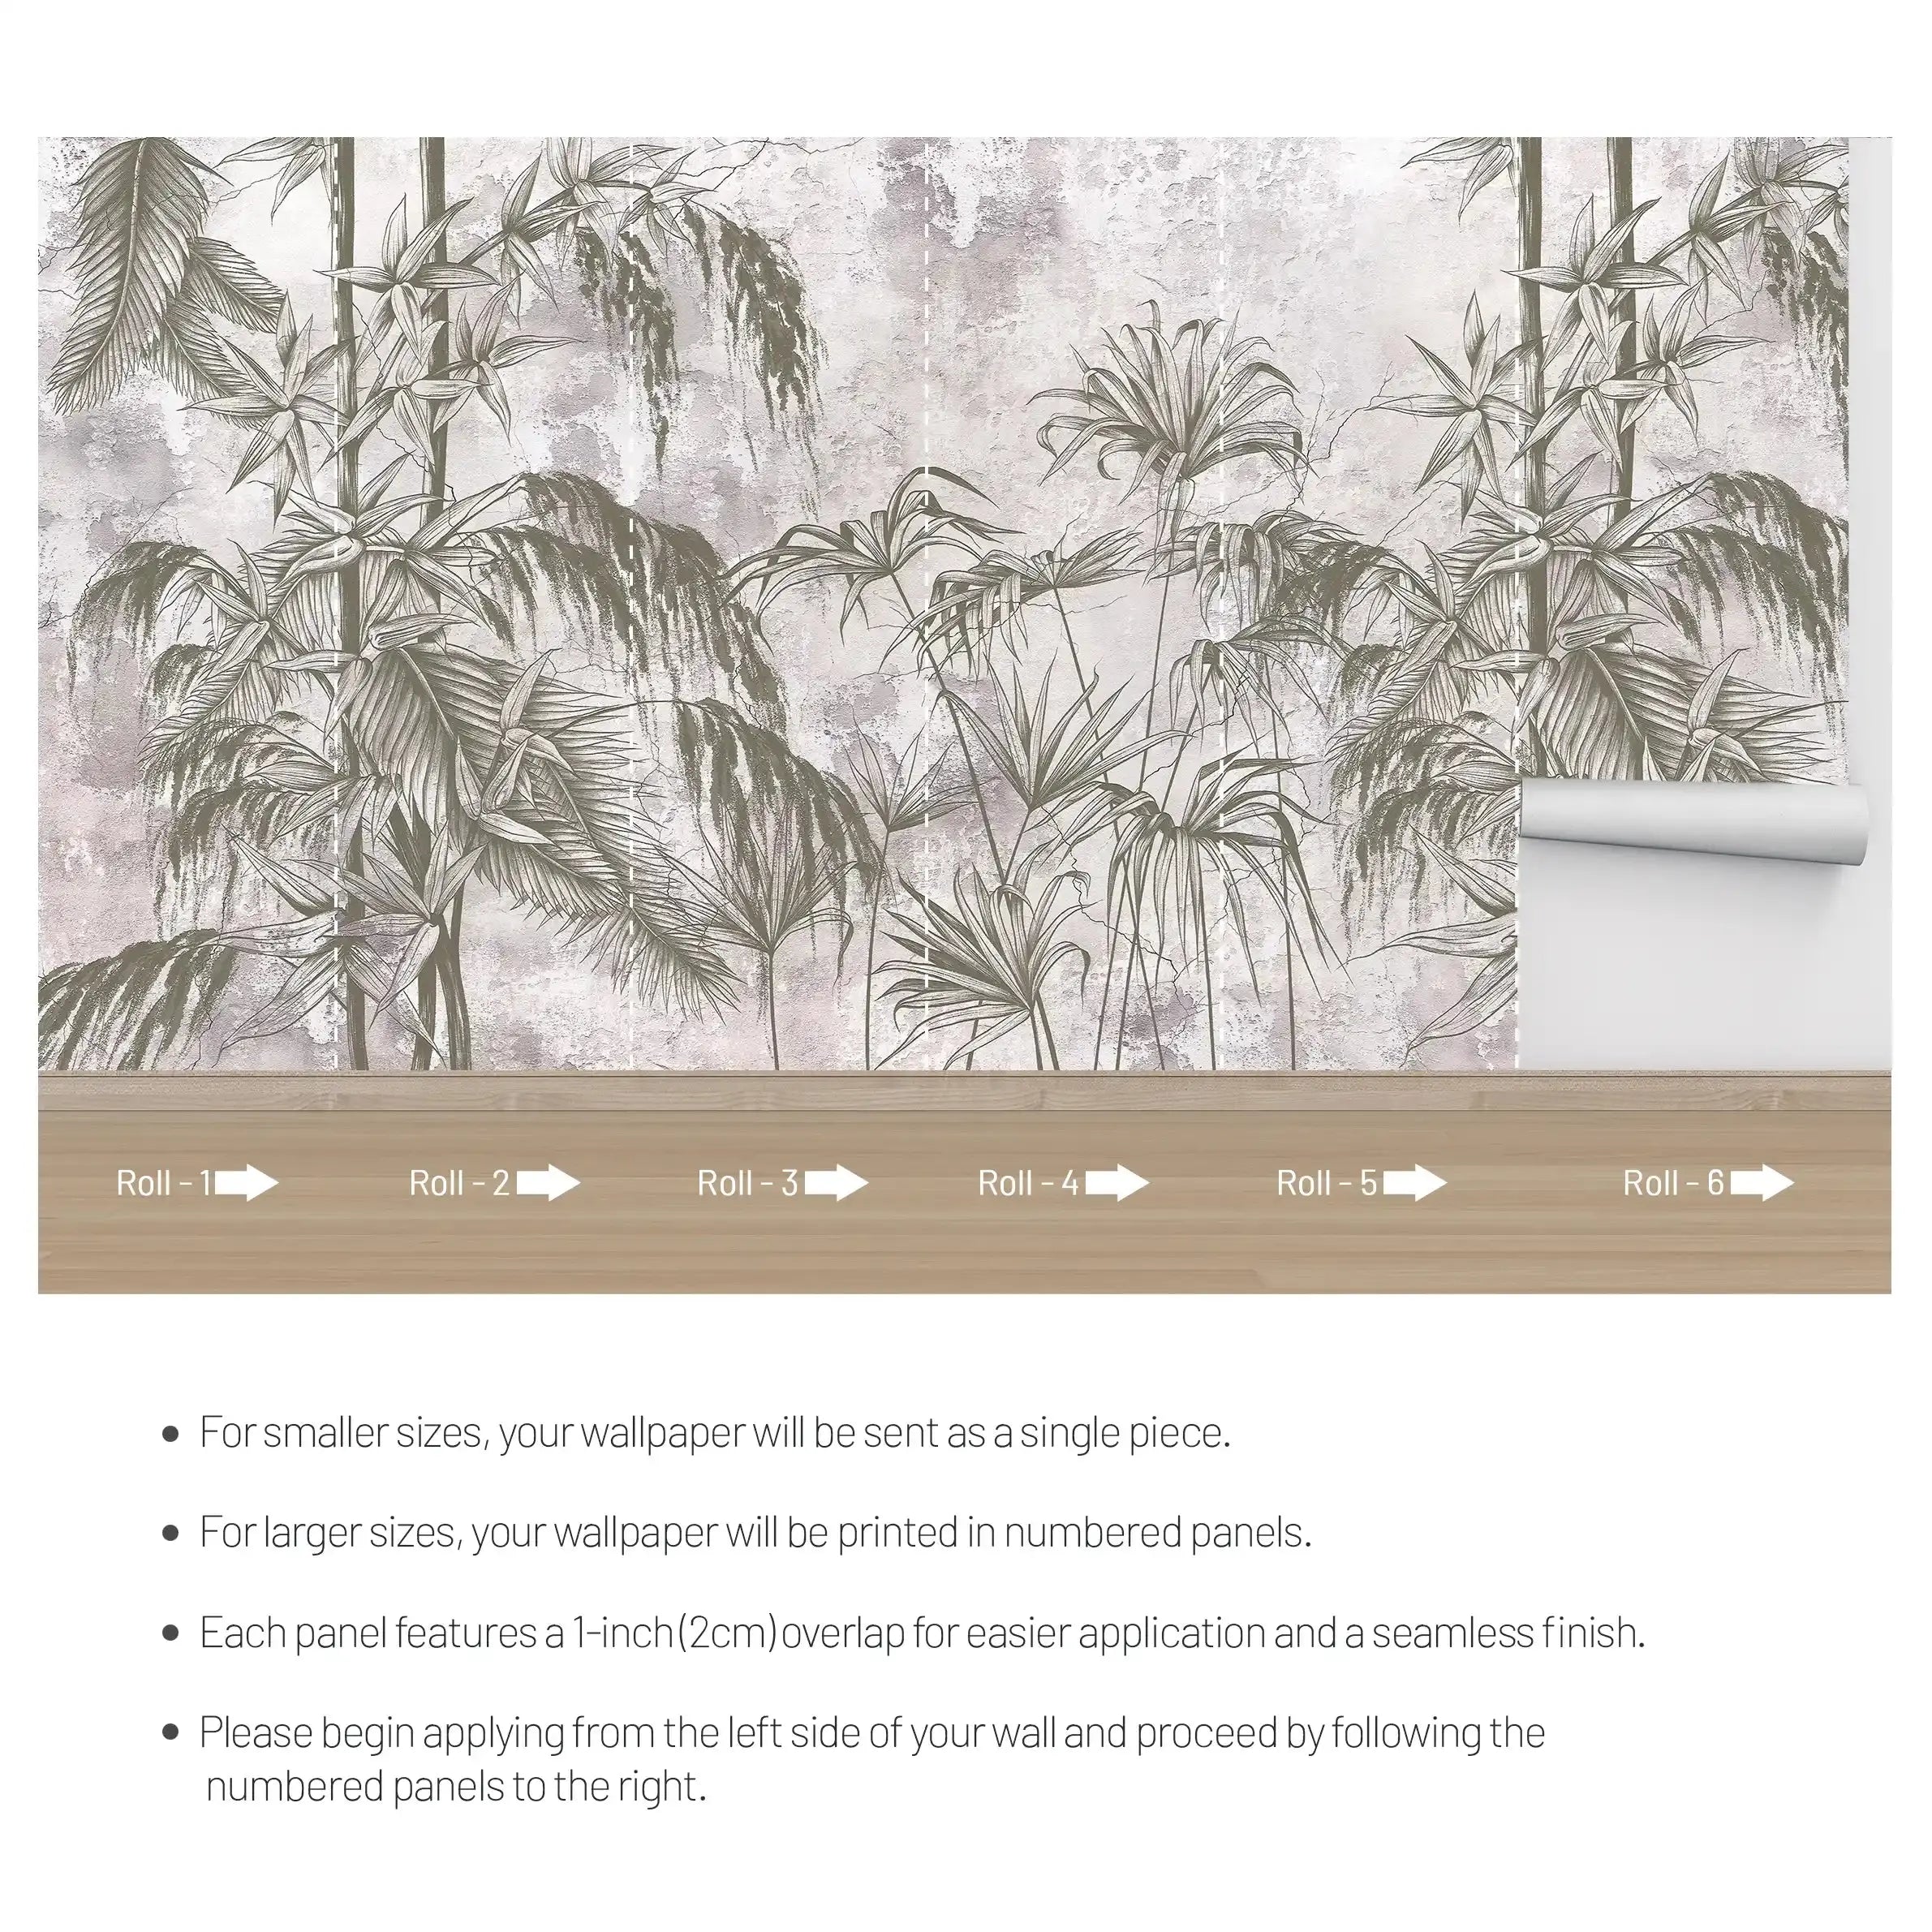 3001-E / Botanical Peel and Stick Wallpaper - Wild Floral, Tropical Leaf Wall Mural, Self Adhesive & Removable Design for Room, Shelf, Drawer Liner - Artevella